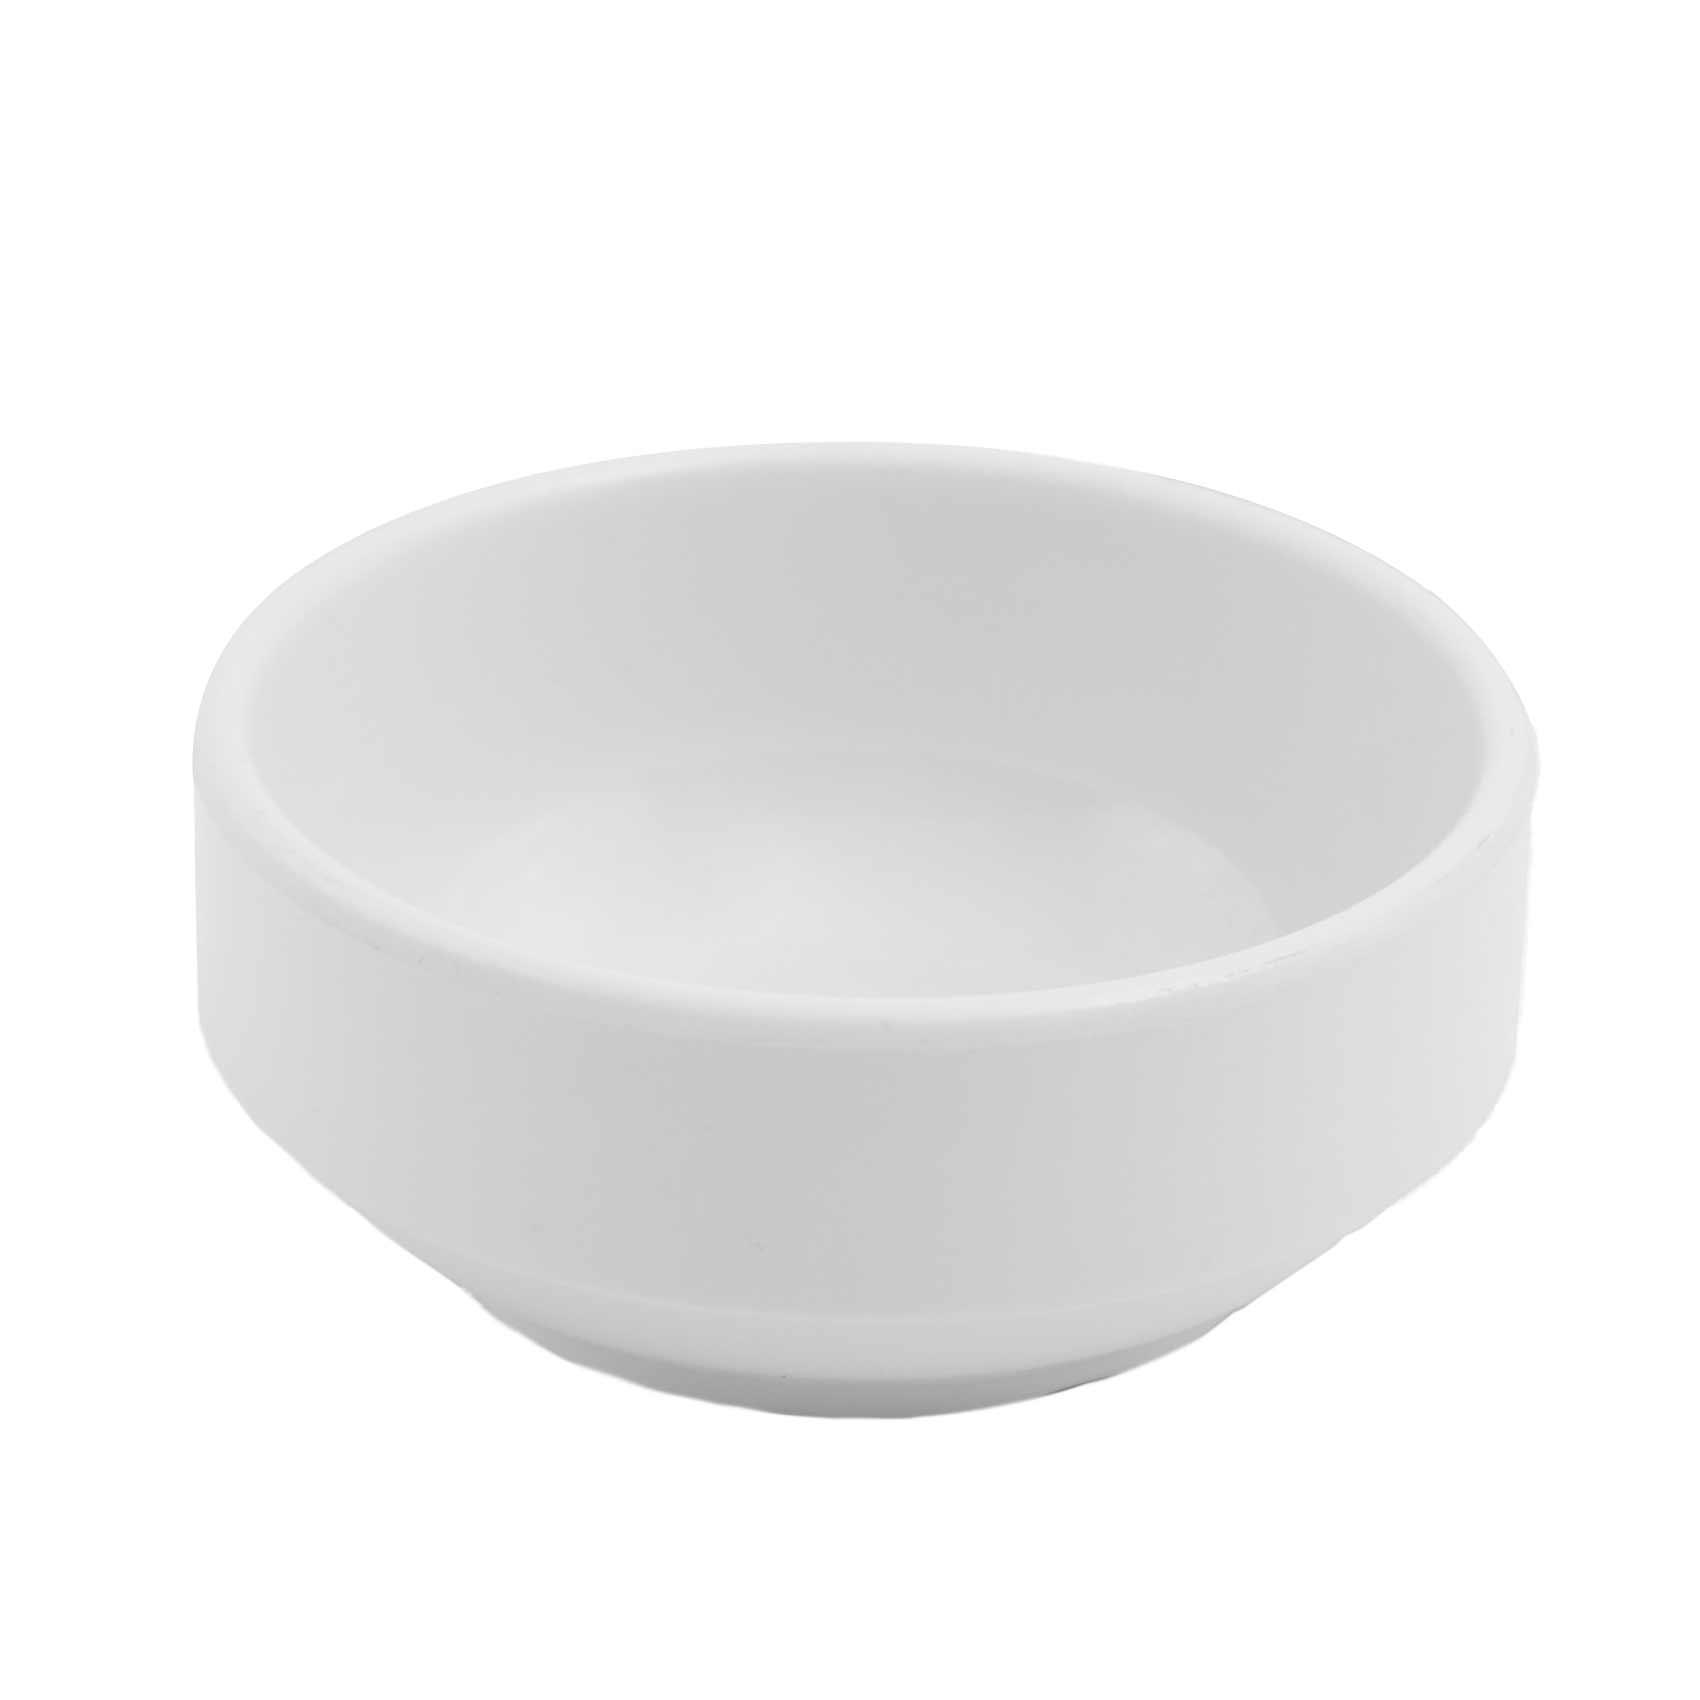 Wom Bowl Ramekin 8 Cm White